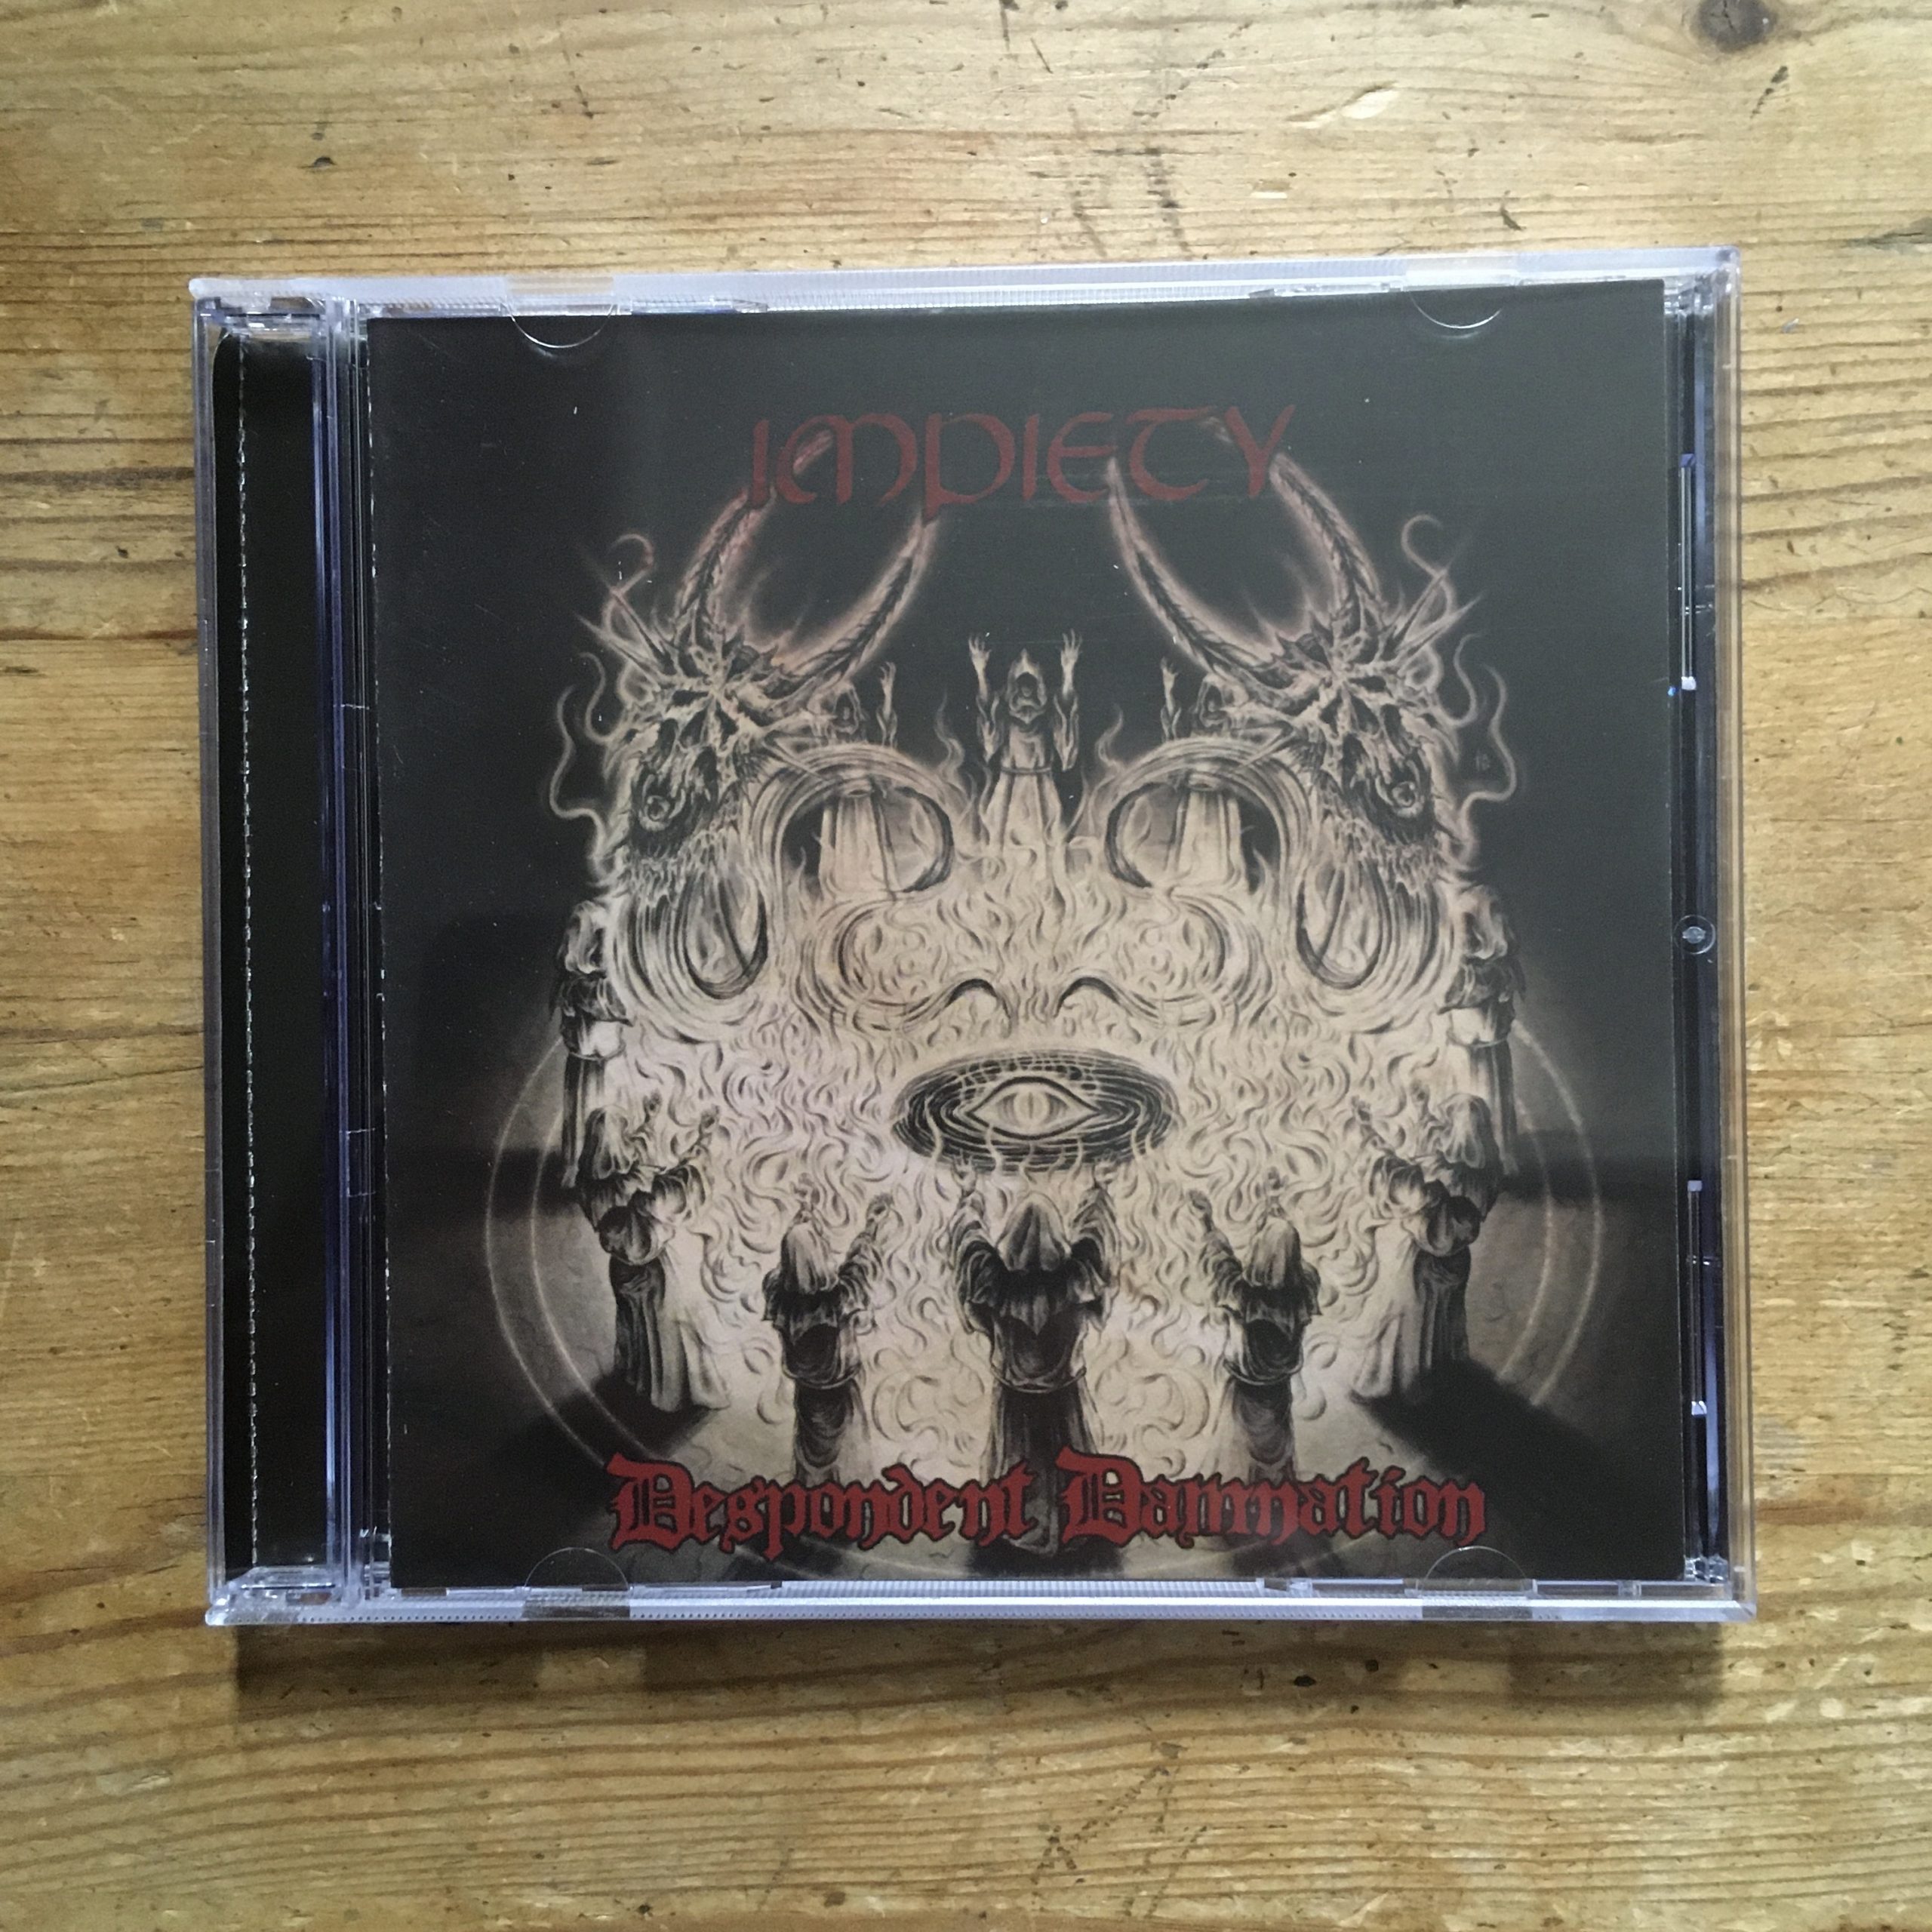 Photo of the Impiety - "Despondent Damnation" CD